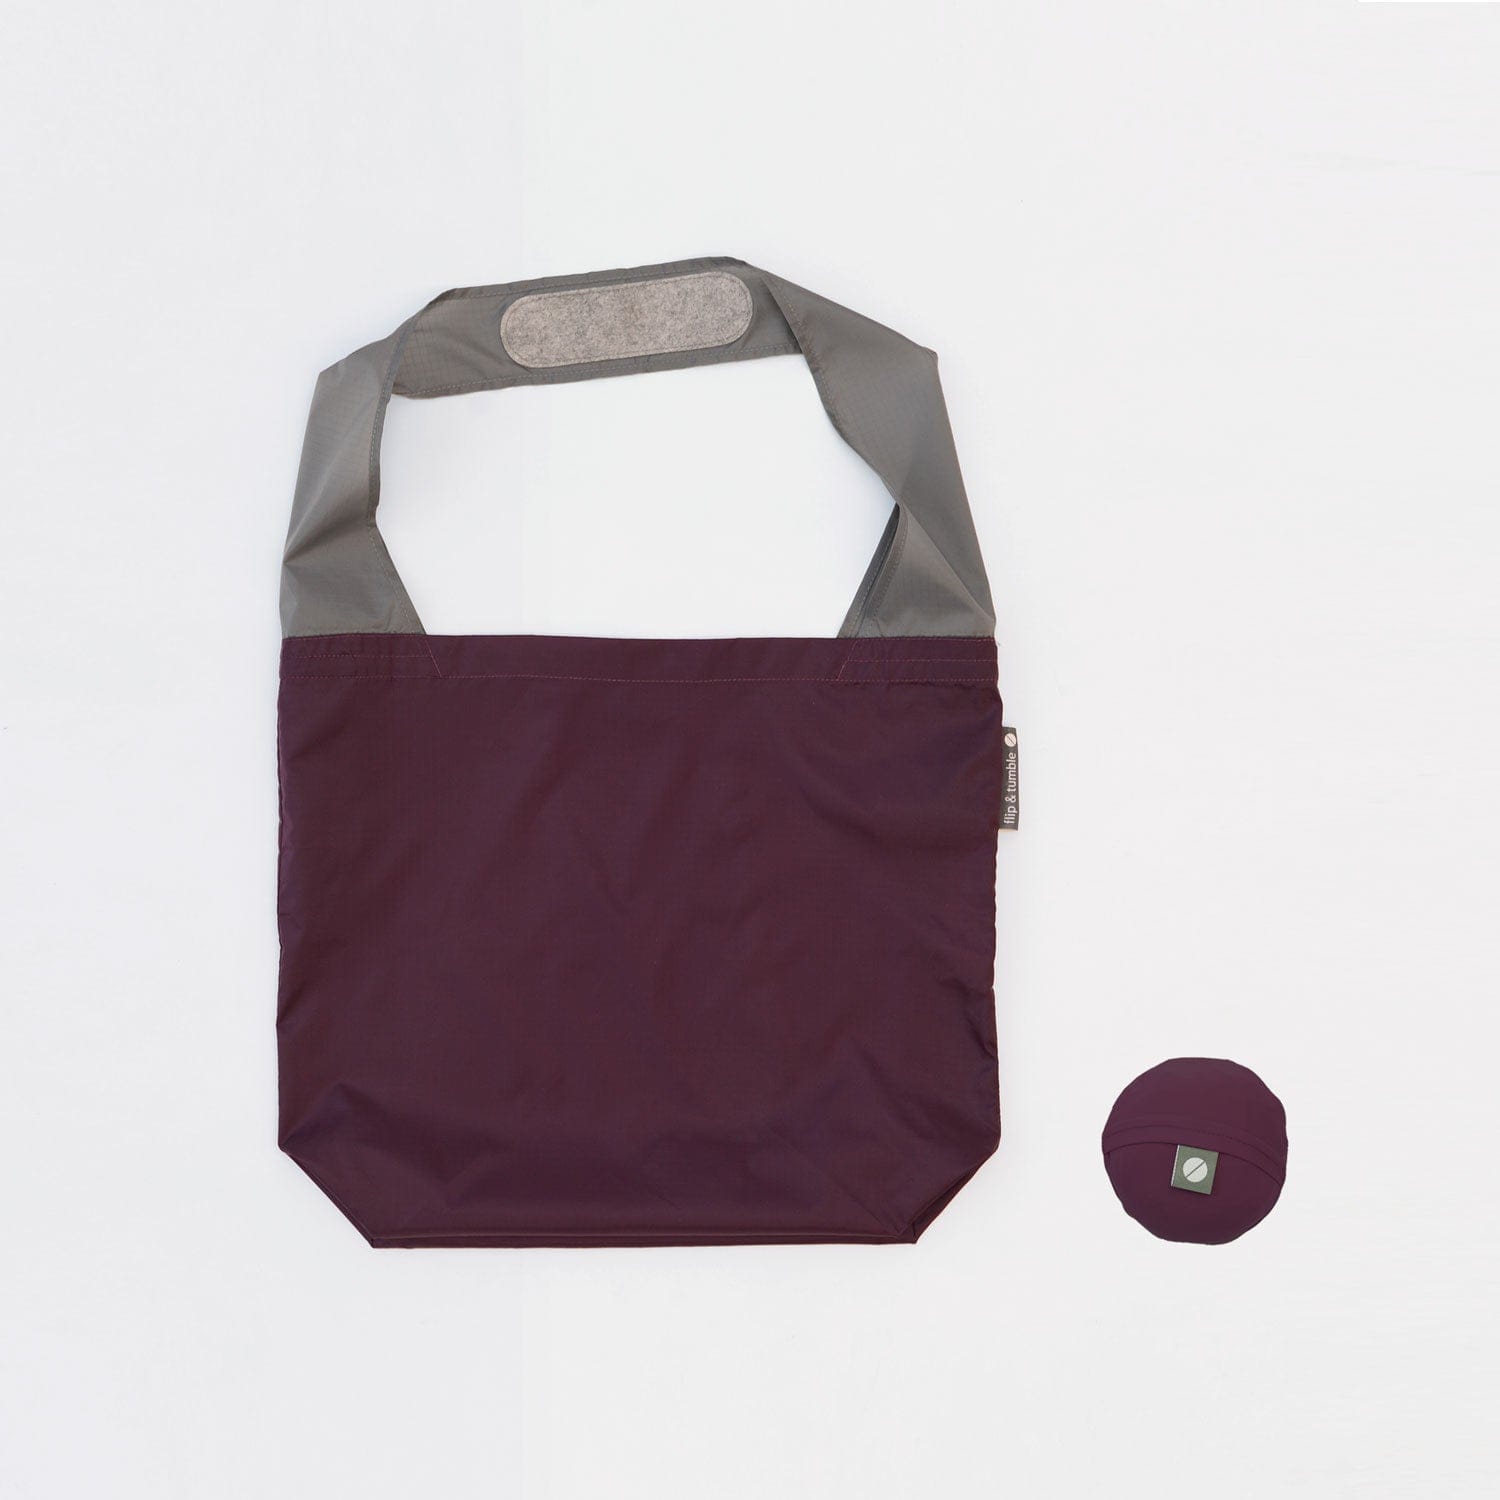 24-7 bag - flip & tumble - purple eggplant packable shopping bag, stylish reusable bag